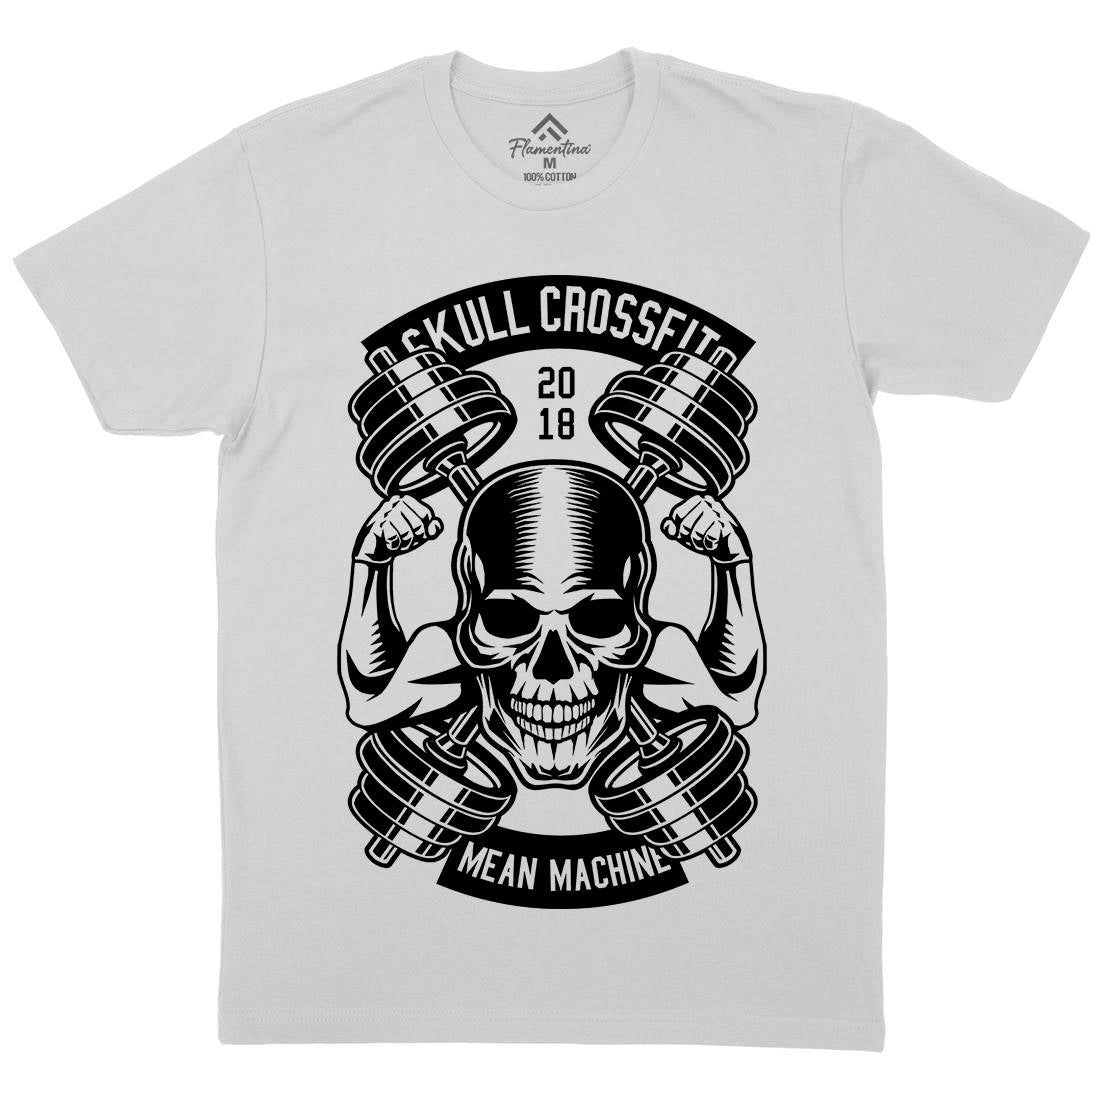 Skull Cross Fit Mens Crew Neck T-Shirt Gym B627